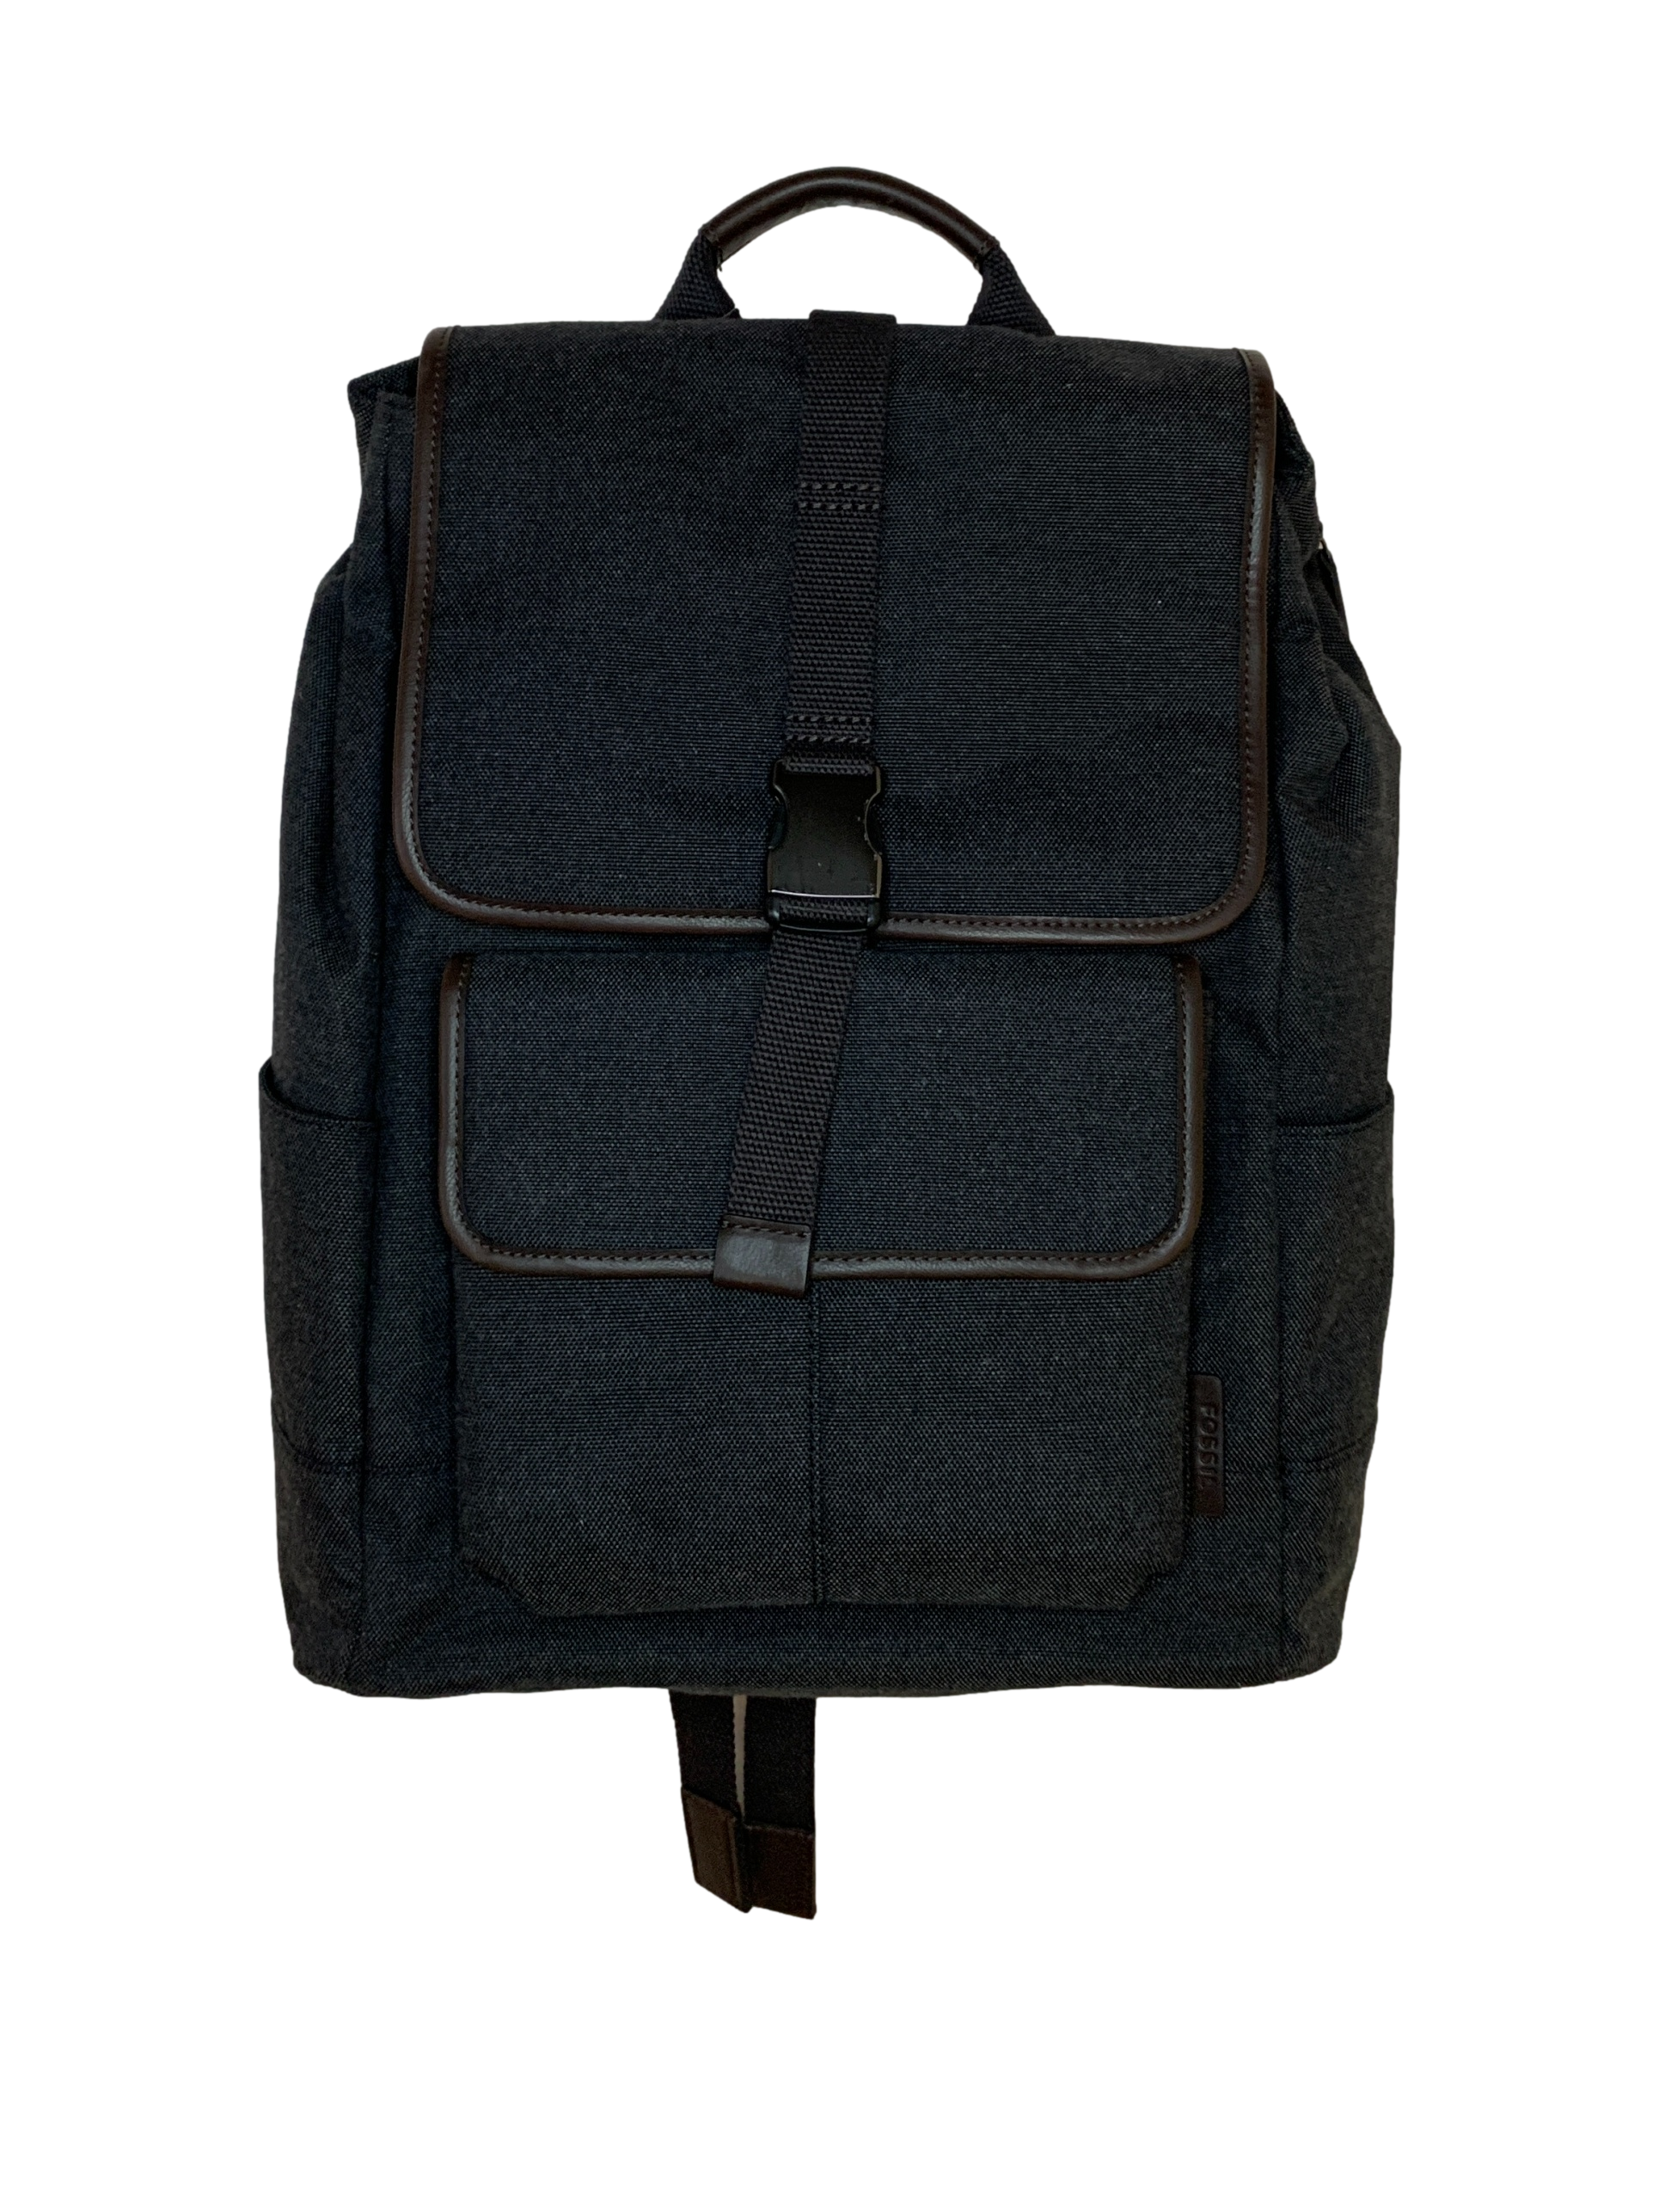 Soot Black Rucksack Backpack